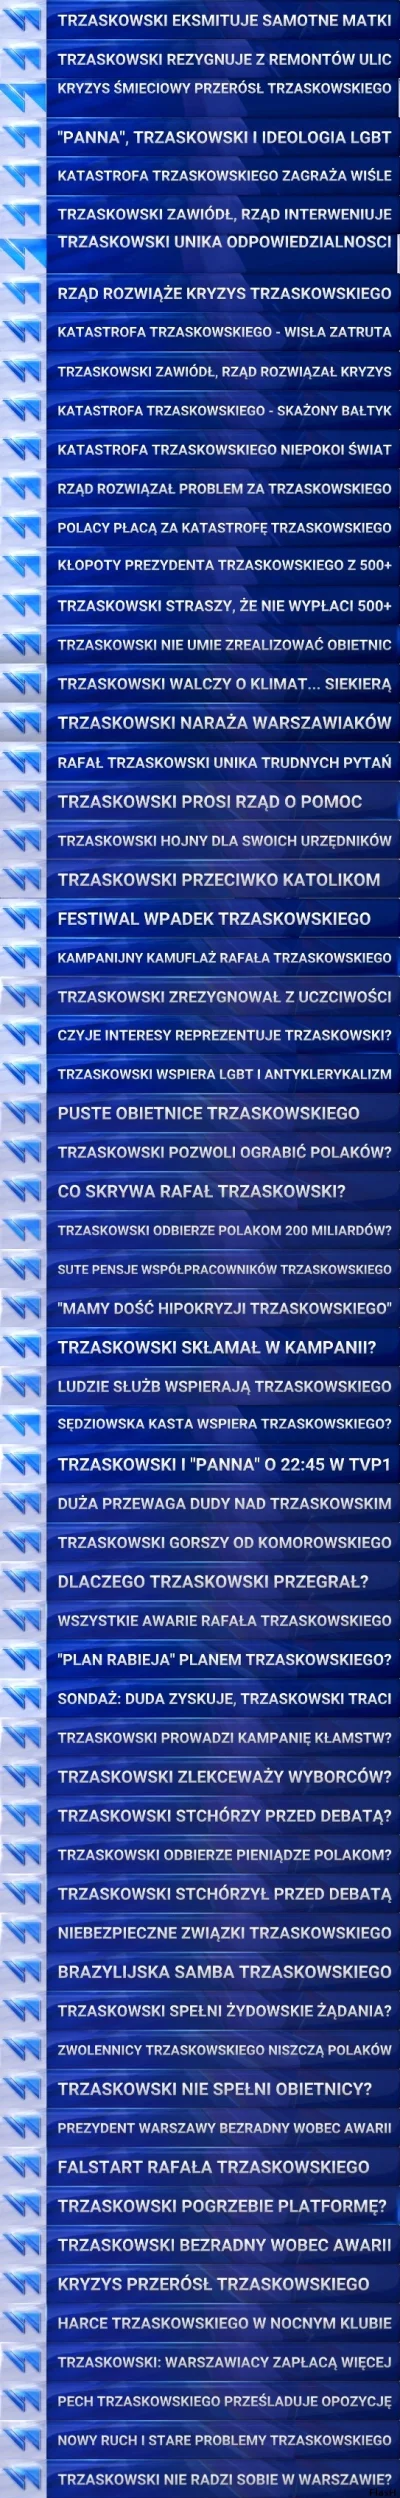 Loginsrogim - Takie tam #tvpis #trzaskowski #heheszki. #bekazpisu #polityka